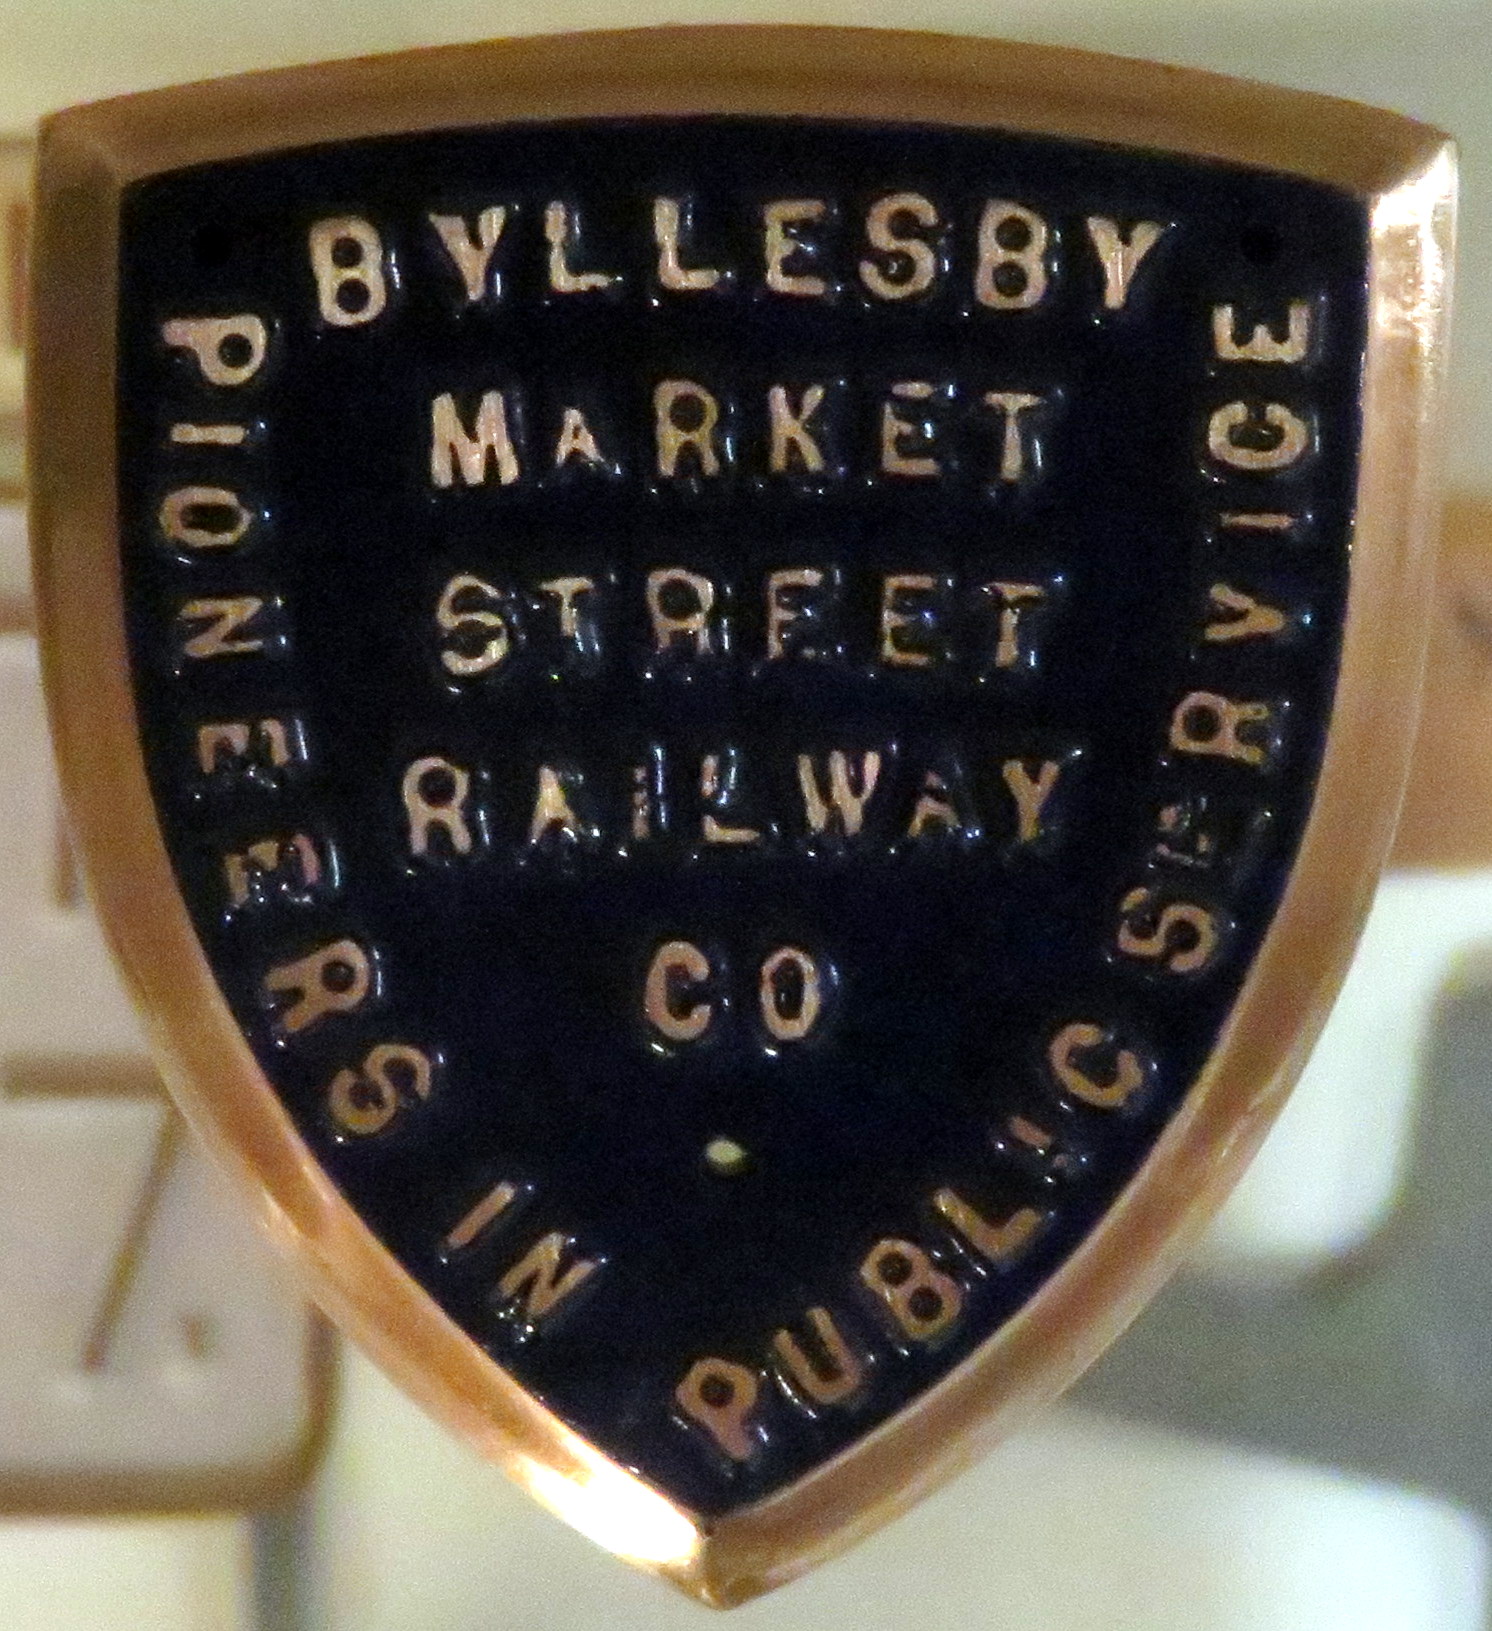 https://upload.wikimedia.org/wikipedia/commons/f/fb/Market_Street_Railway_brass_logo.JPG